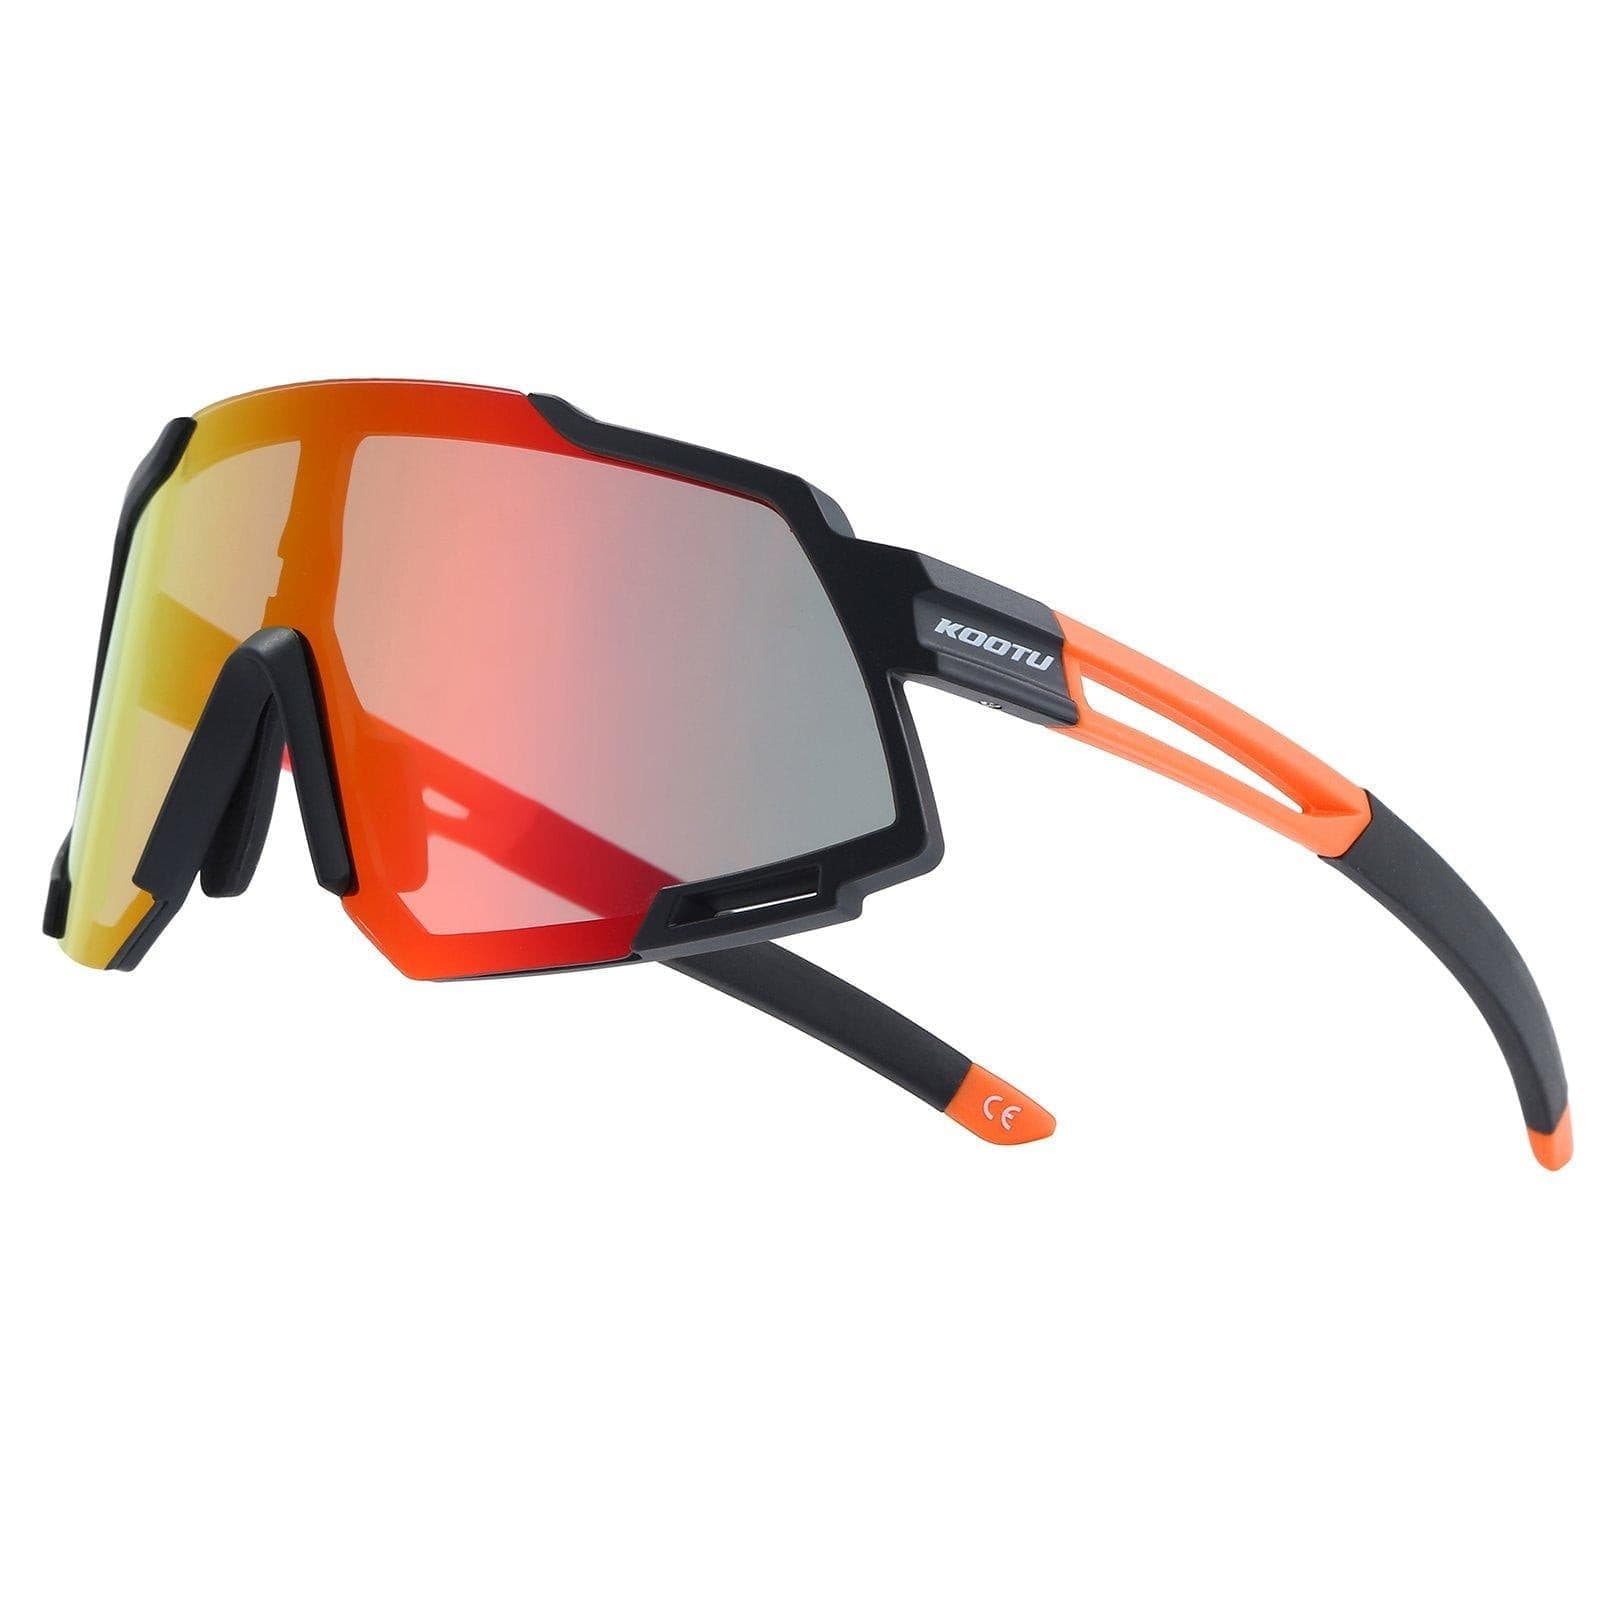 Polarized Cycling Sunglasses 5 Lens Bike Glasses Cycling Eyewear, Black Red